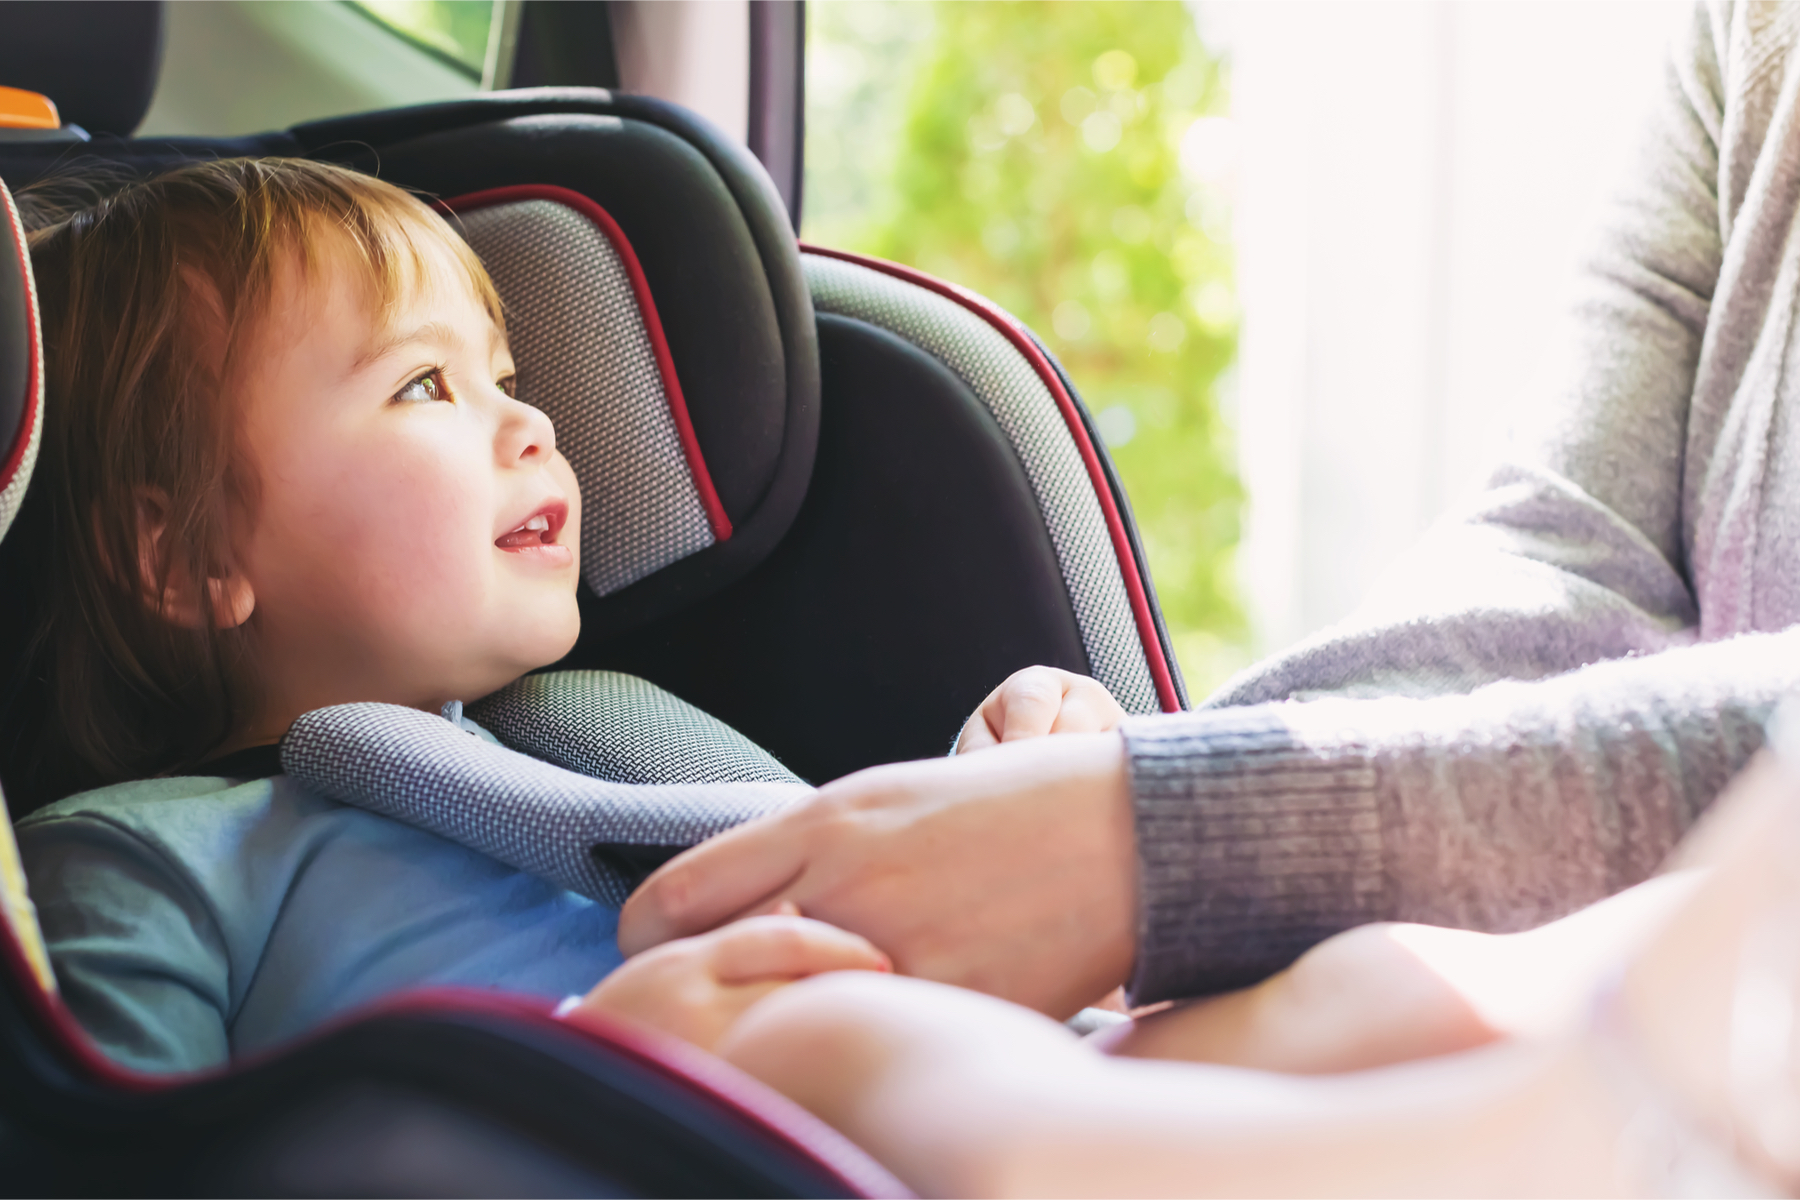 Child car seat laws